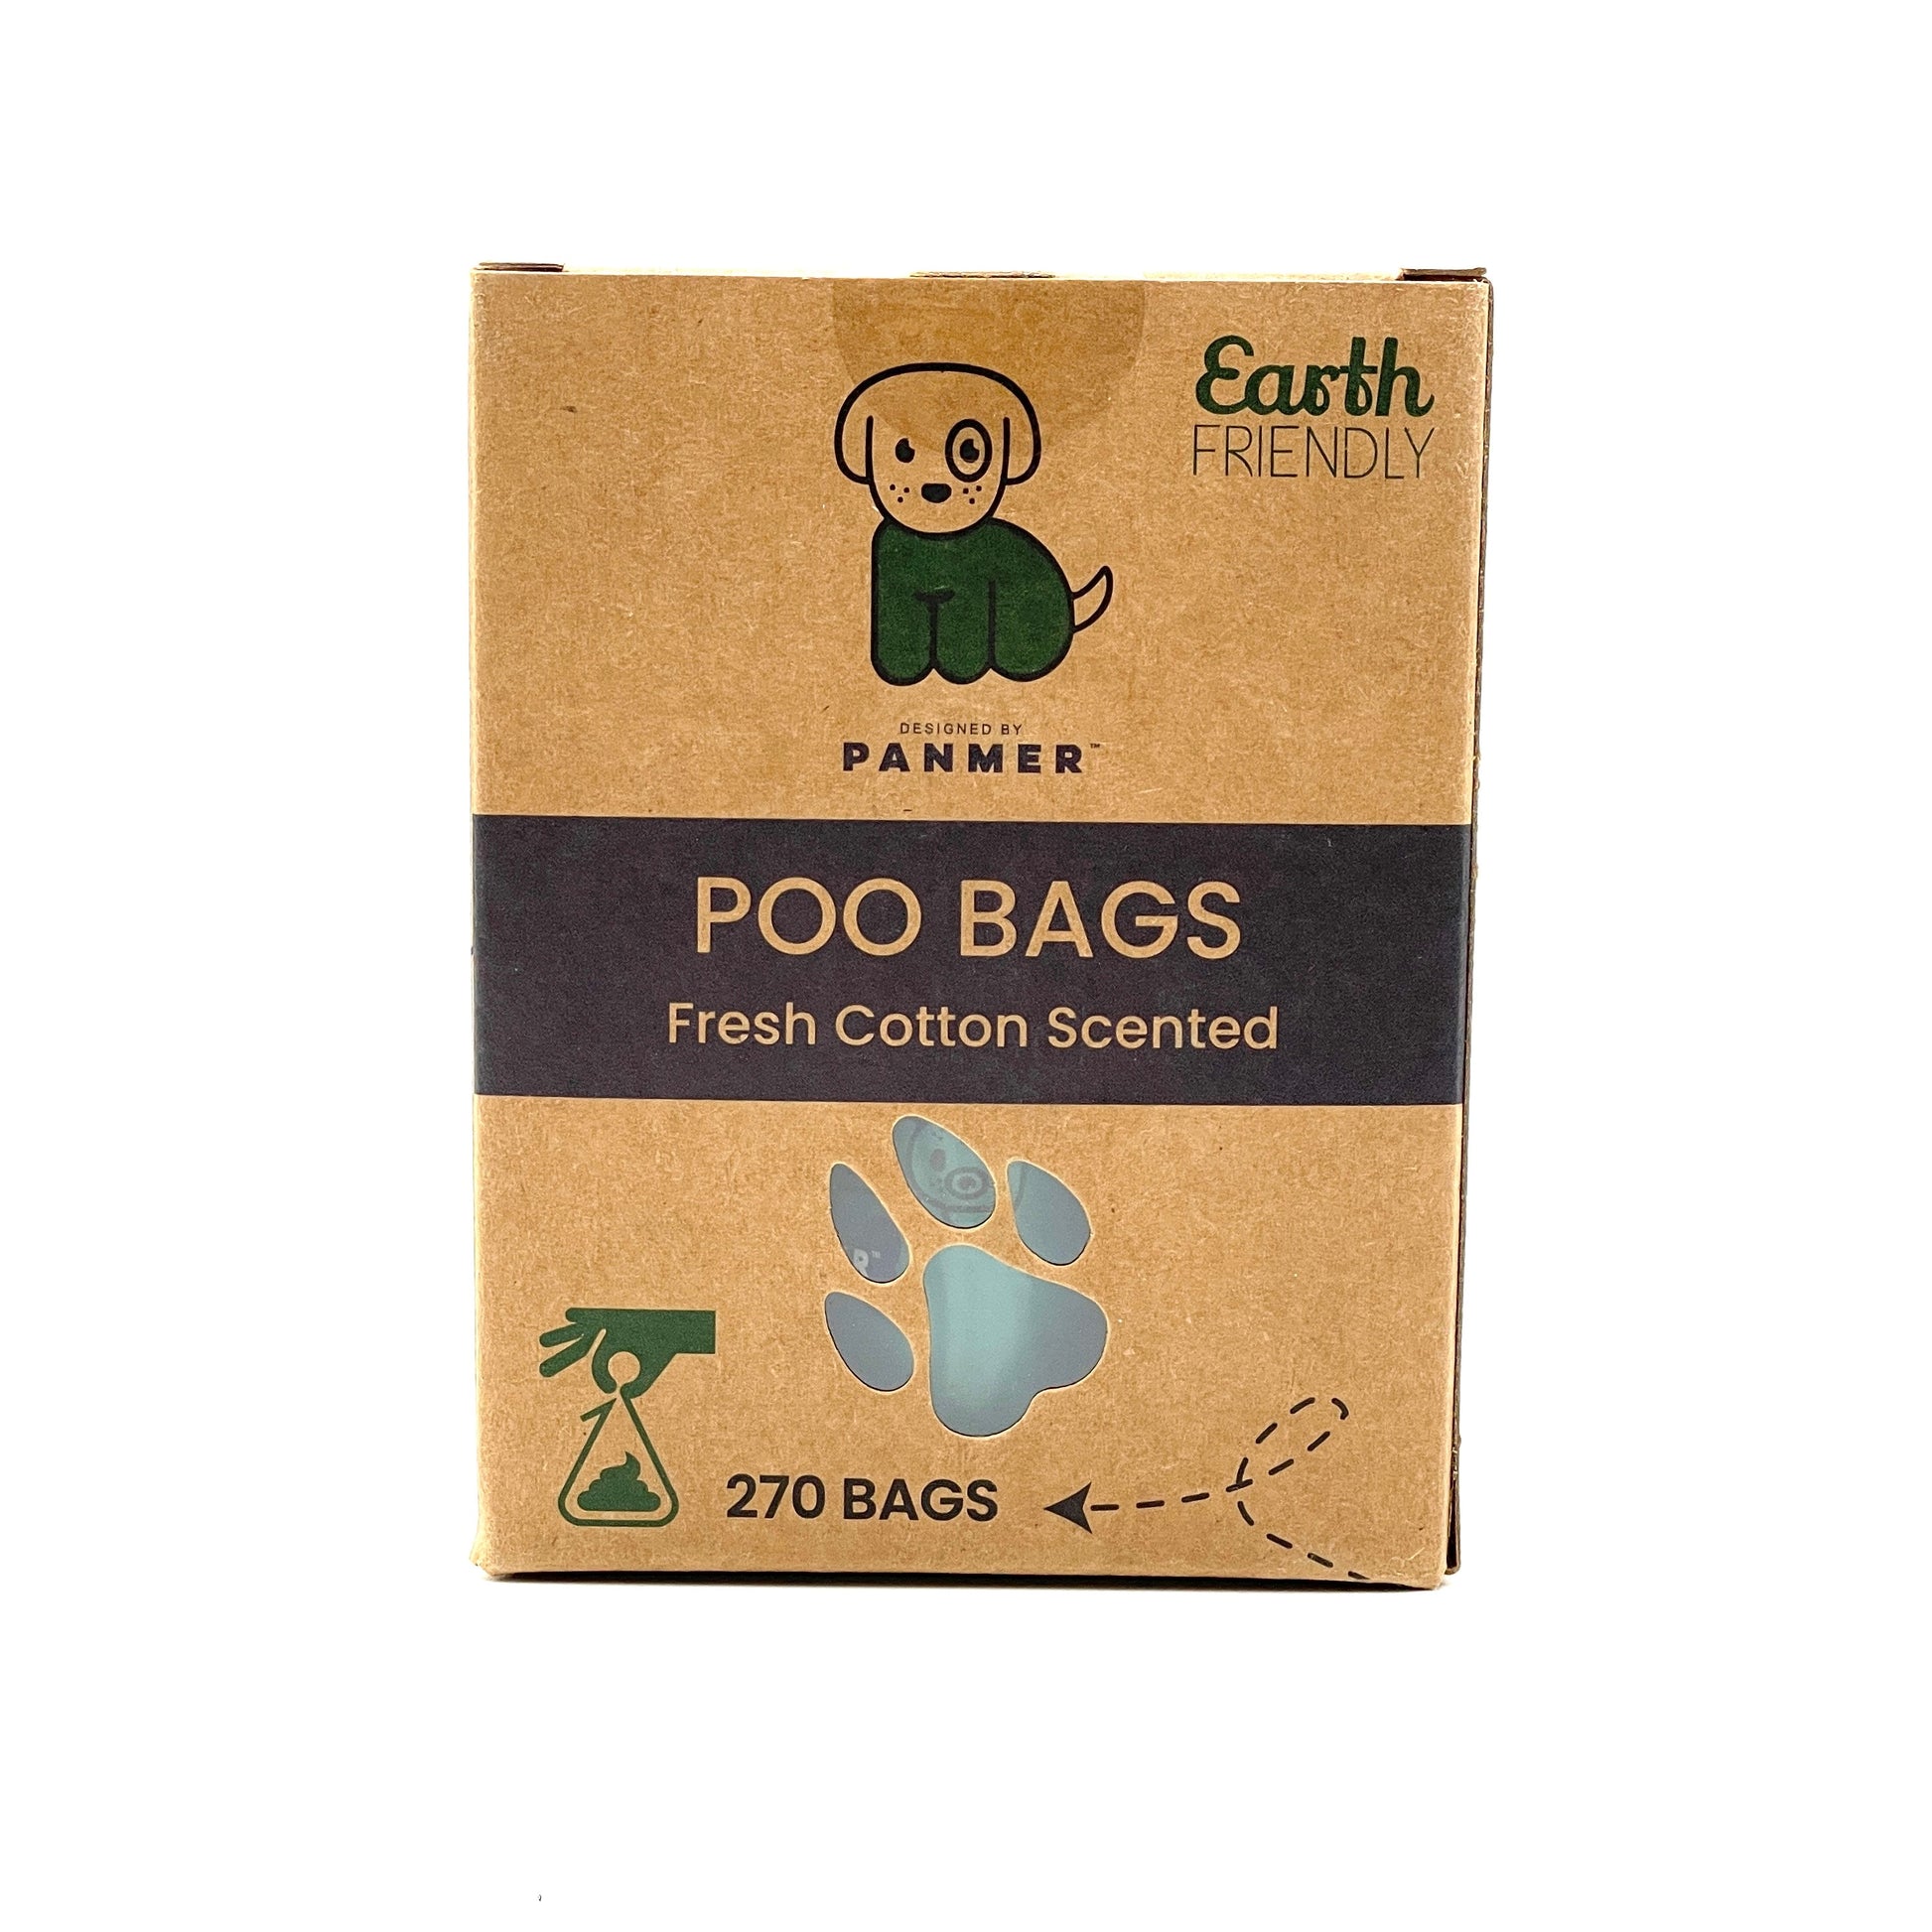 NEW! Dog Poo Bags - PCR - Pet Wipes & Poo Bags